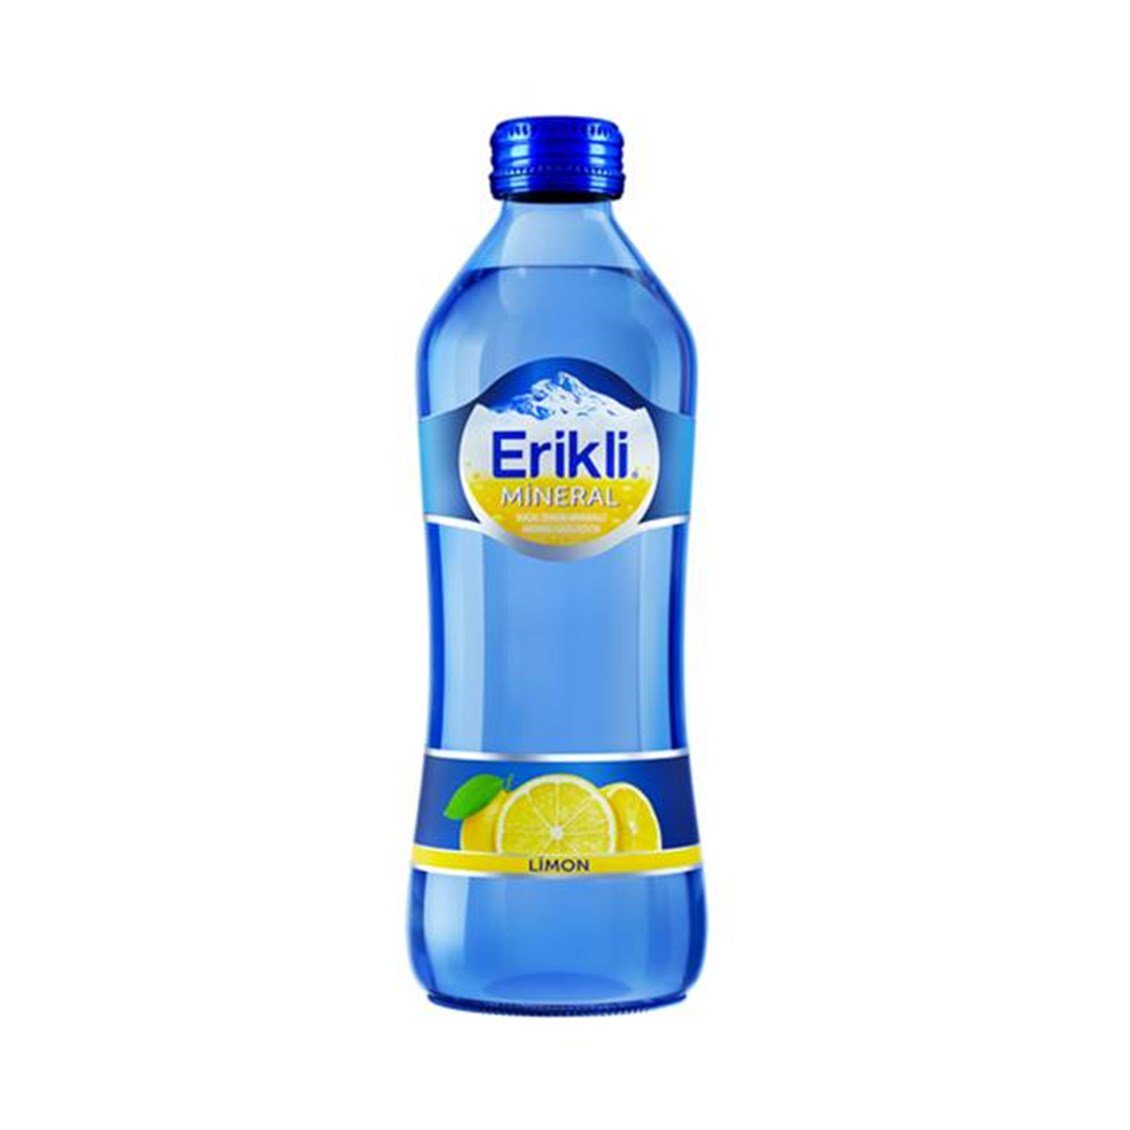 Erikli Mineralli Limon Maden Suyu 200 ml - Onur Market